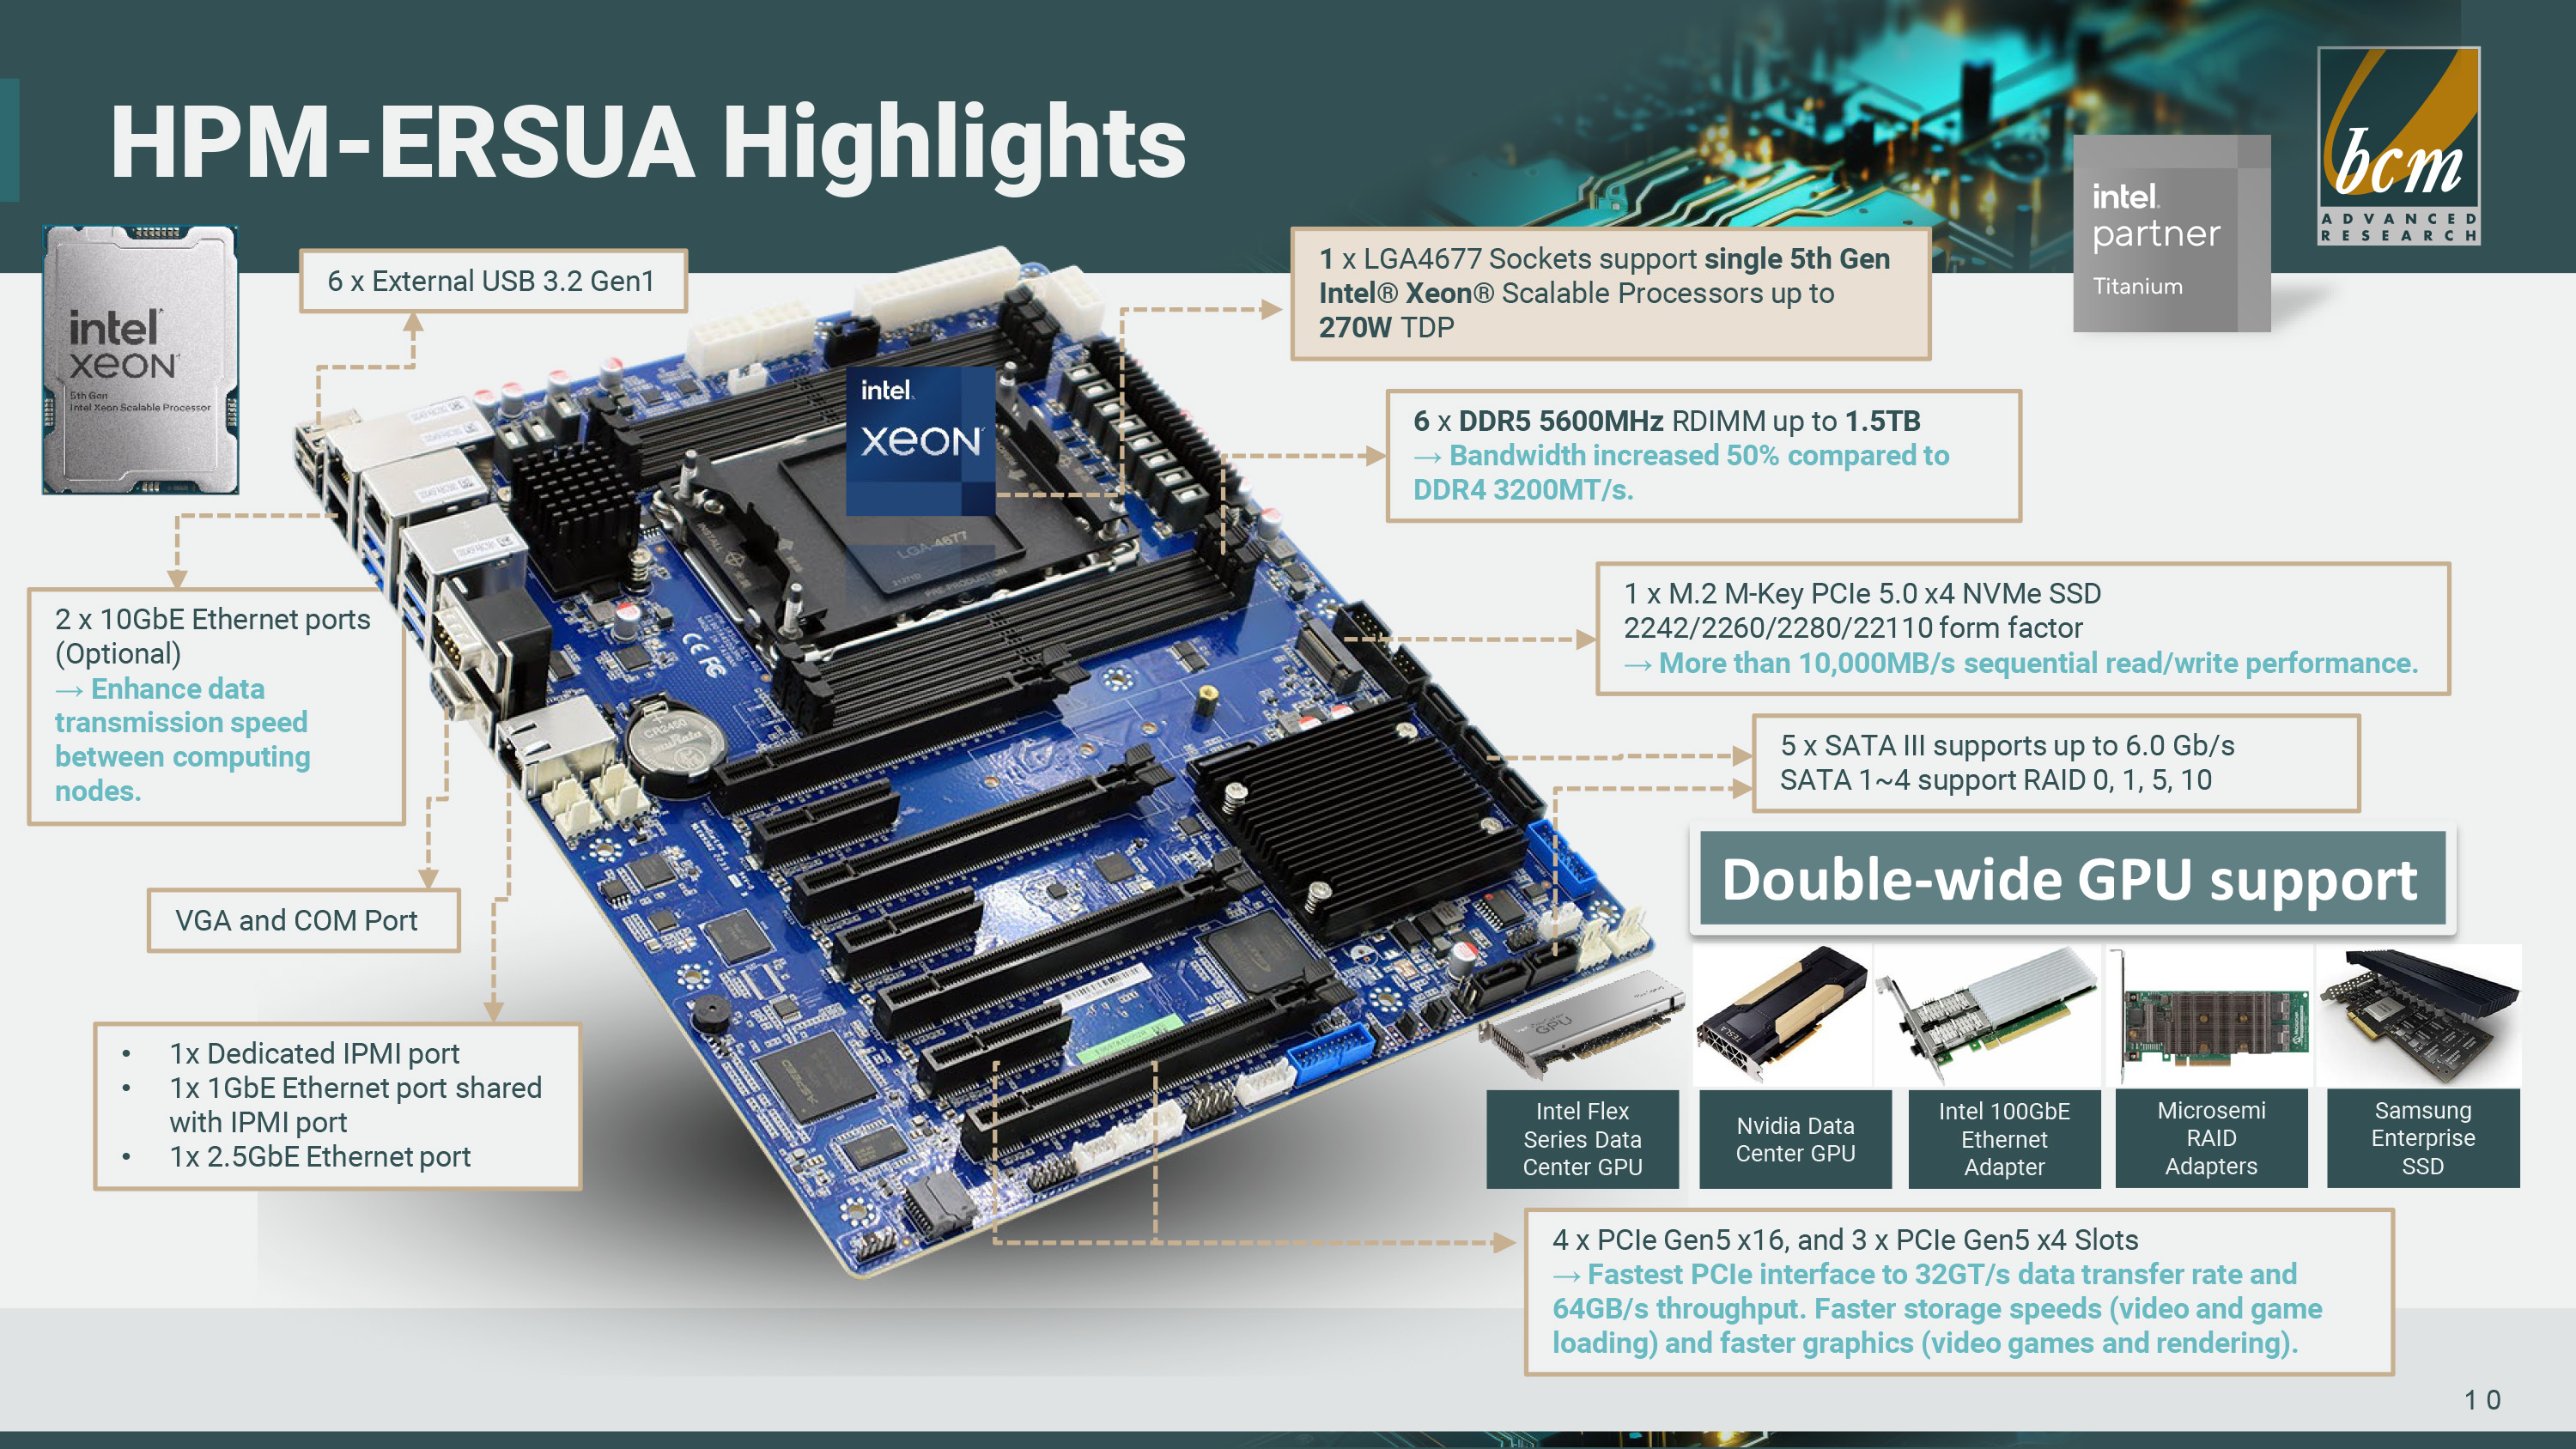 HPM-ERSDE dual sockets support 5th Gen Intel Xeon Processors